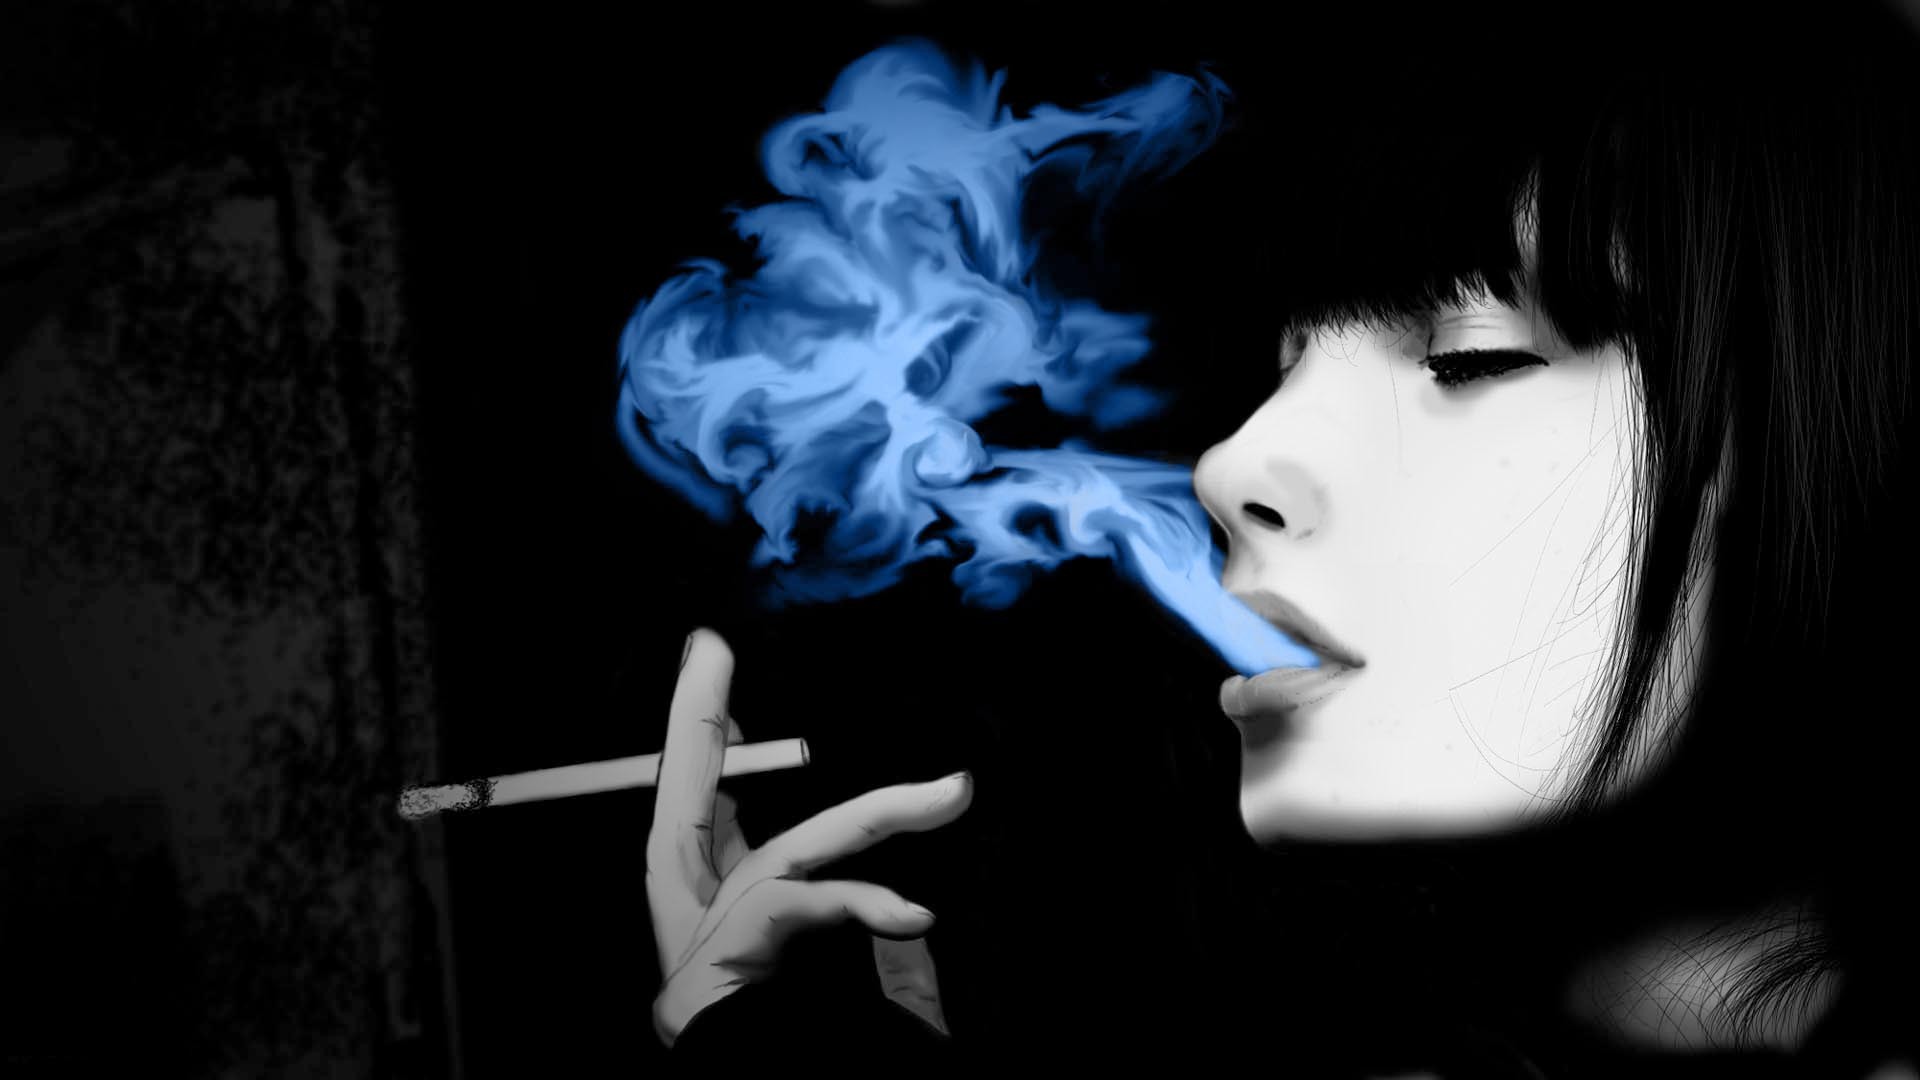 Wallpapers Weed Smoking And Guns Girls Abstract Music Smoke High ...